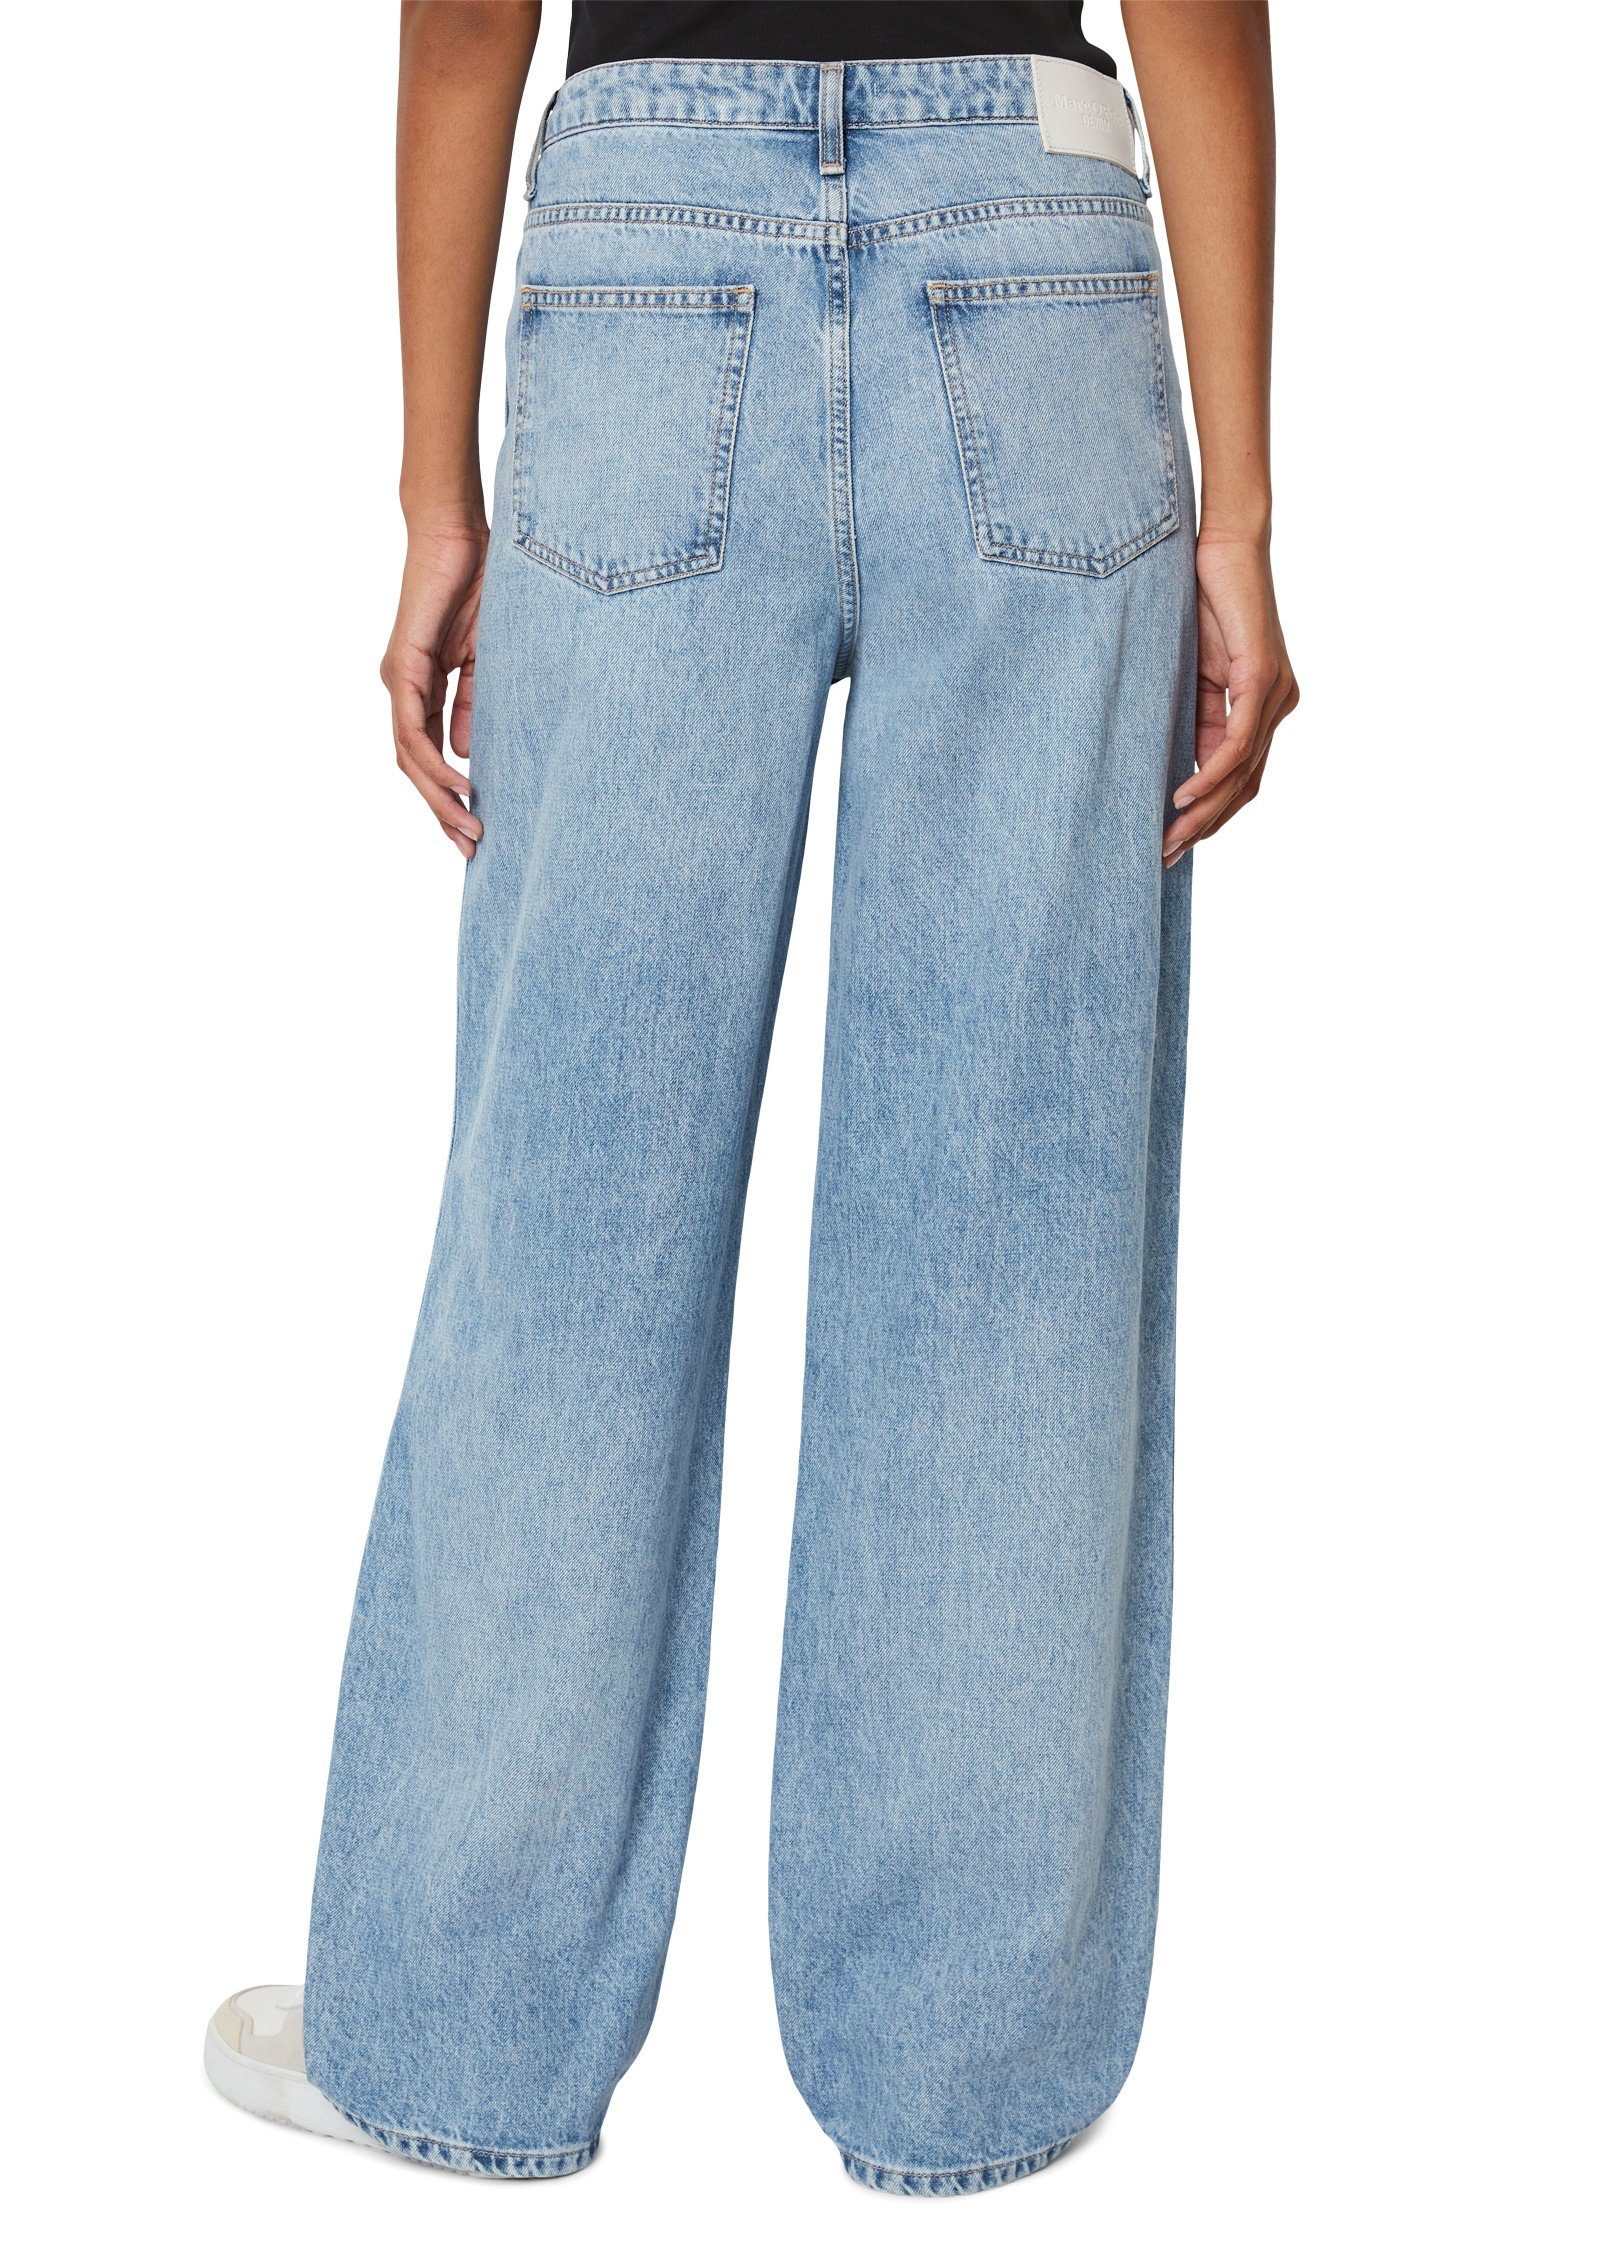 aus DENIM Organic O'Polo Cotton-Denim reinem 5-Pocket-Jeans Marc